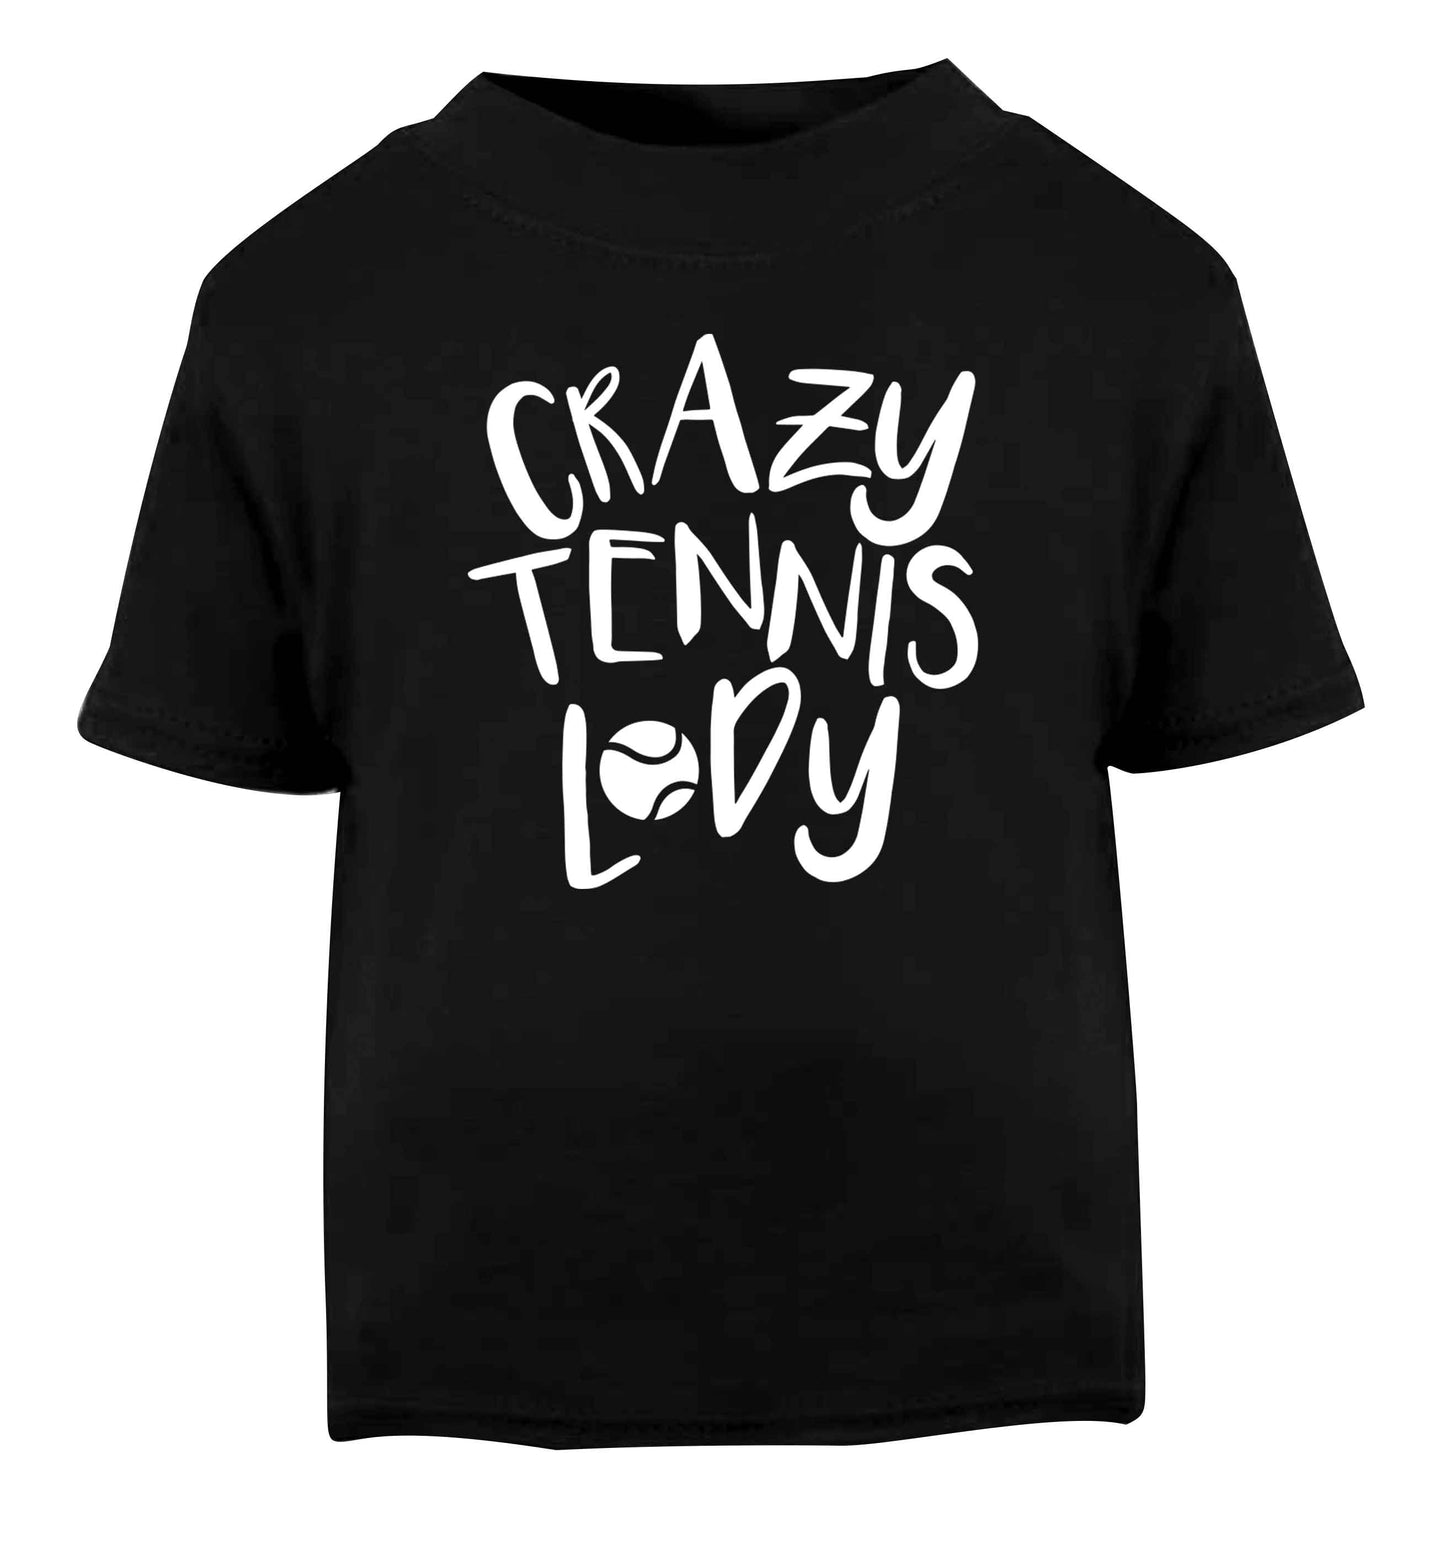 Crazy tennis lady Black Baby Toddler Tshirt 2 years